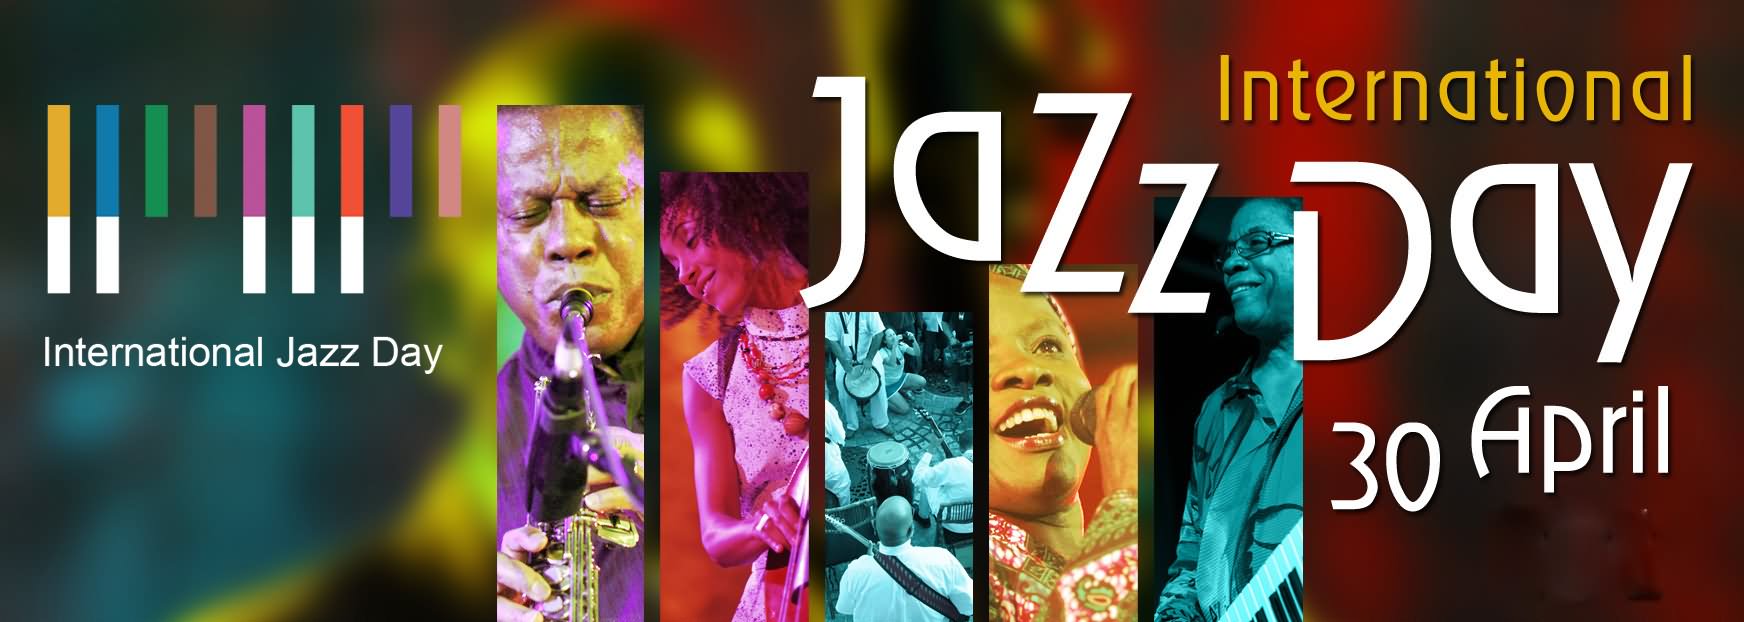 International-Jazz-Day-30-April-Facebook